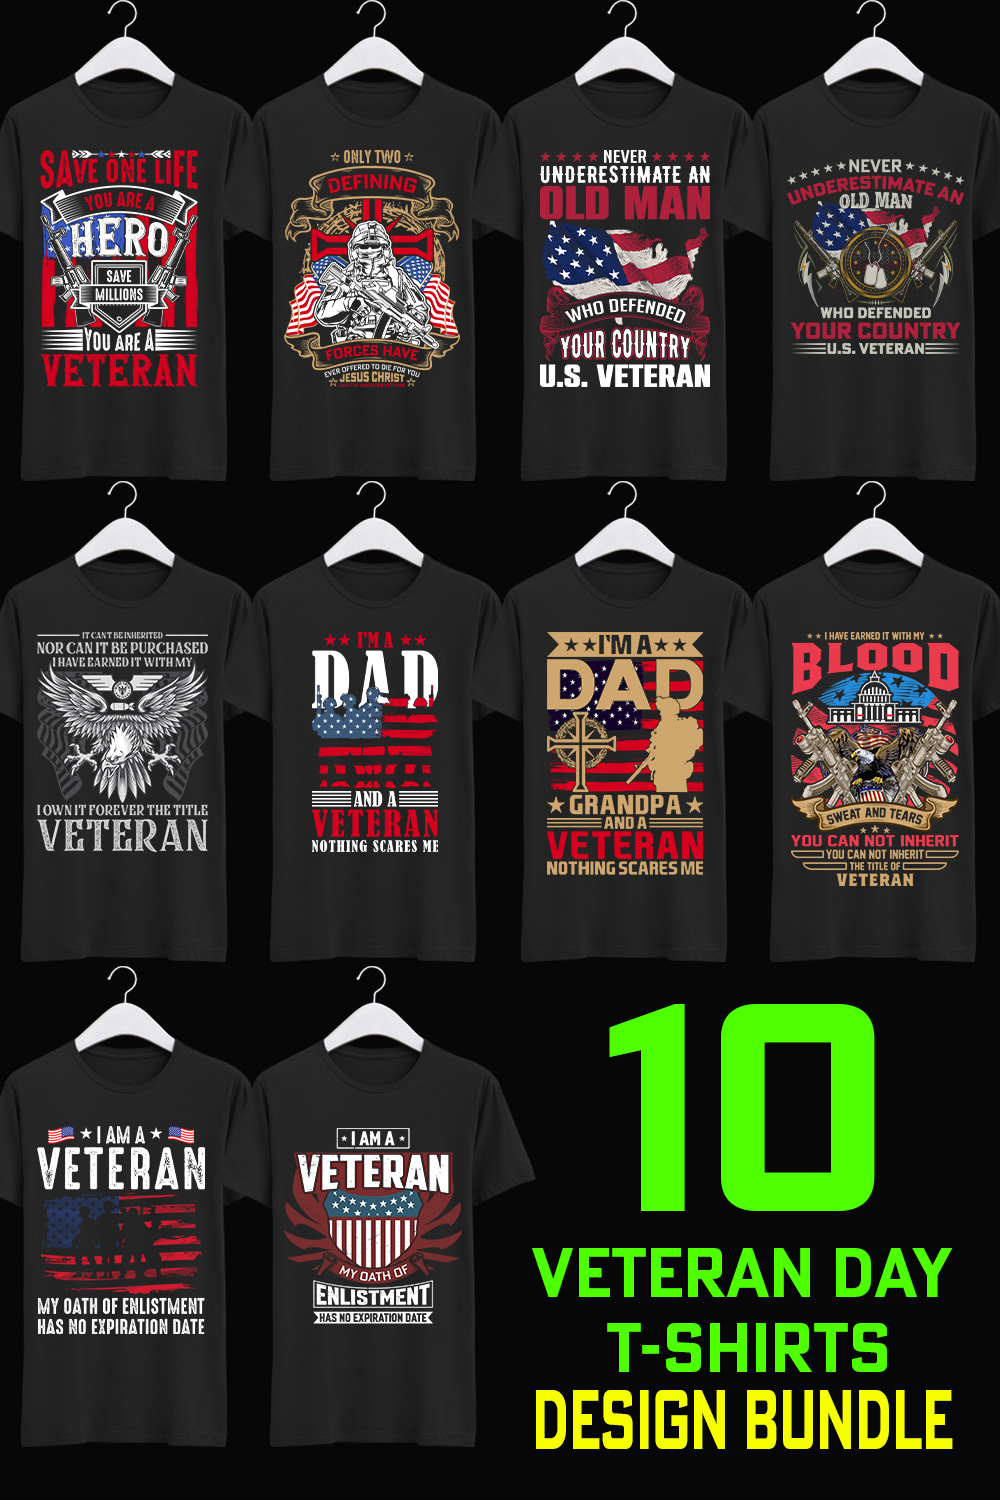 Veteran's Day T-Shirts Design Bundle pinterest preview image.